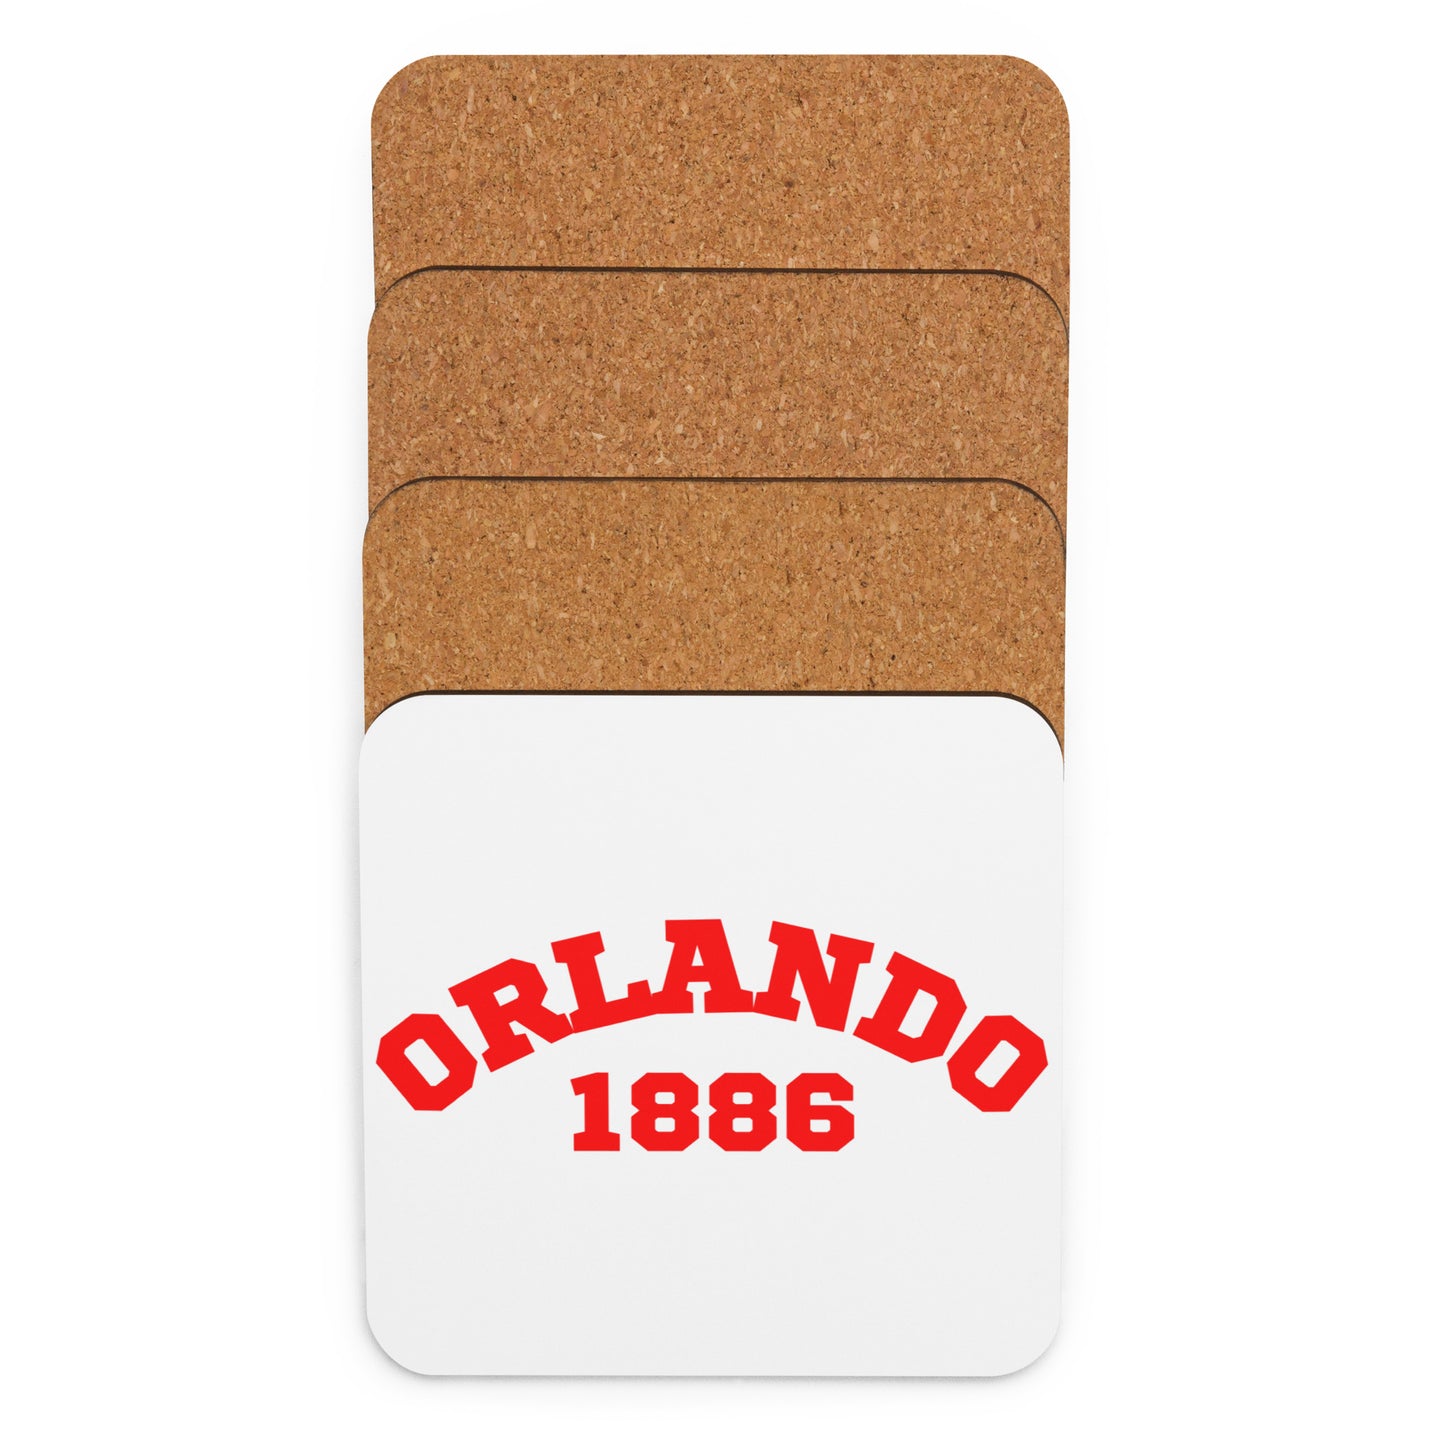 "Orlando 1886" cork-back Coaster - Red & White